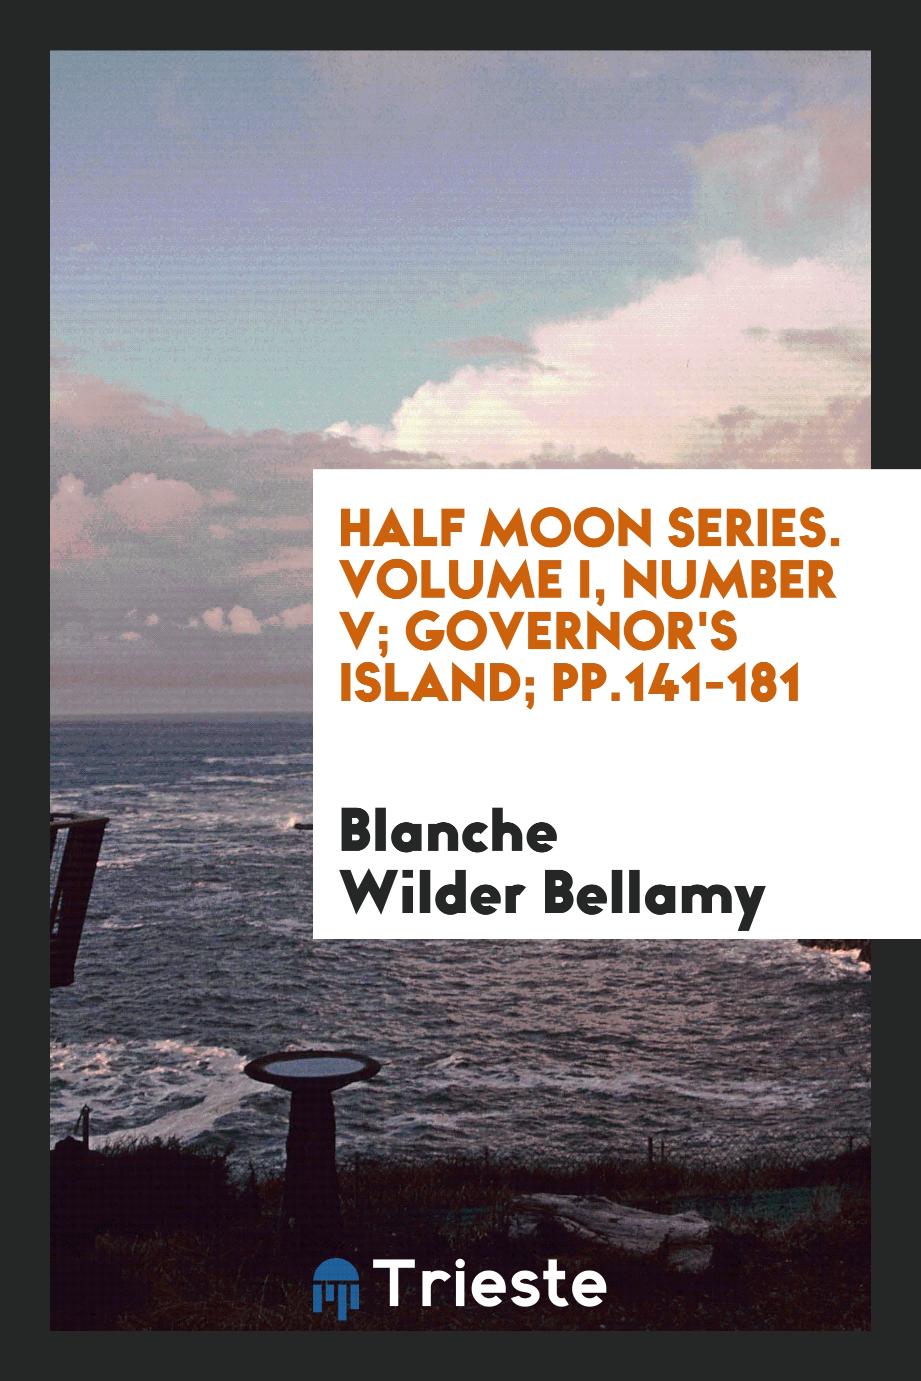 Blanche Wilder Bellamy - Half Moon Series. Volume I, Number V; Governor's Island; pp.141-181